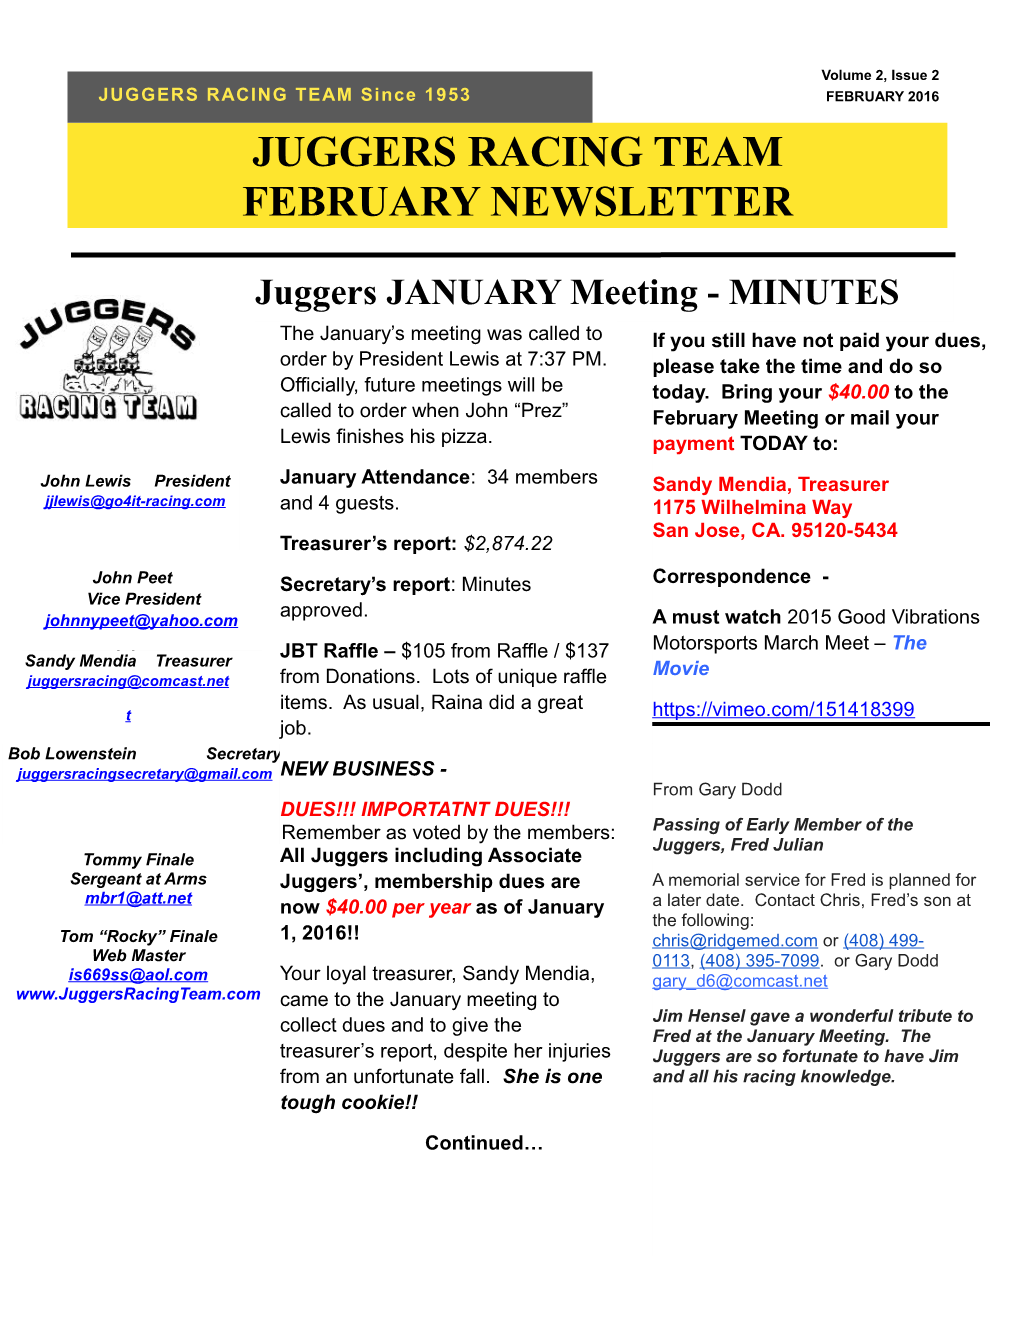 Juggers Racing Team February Newsletter Cont D